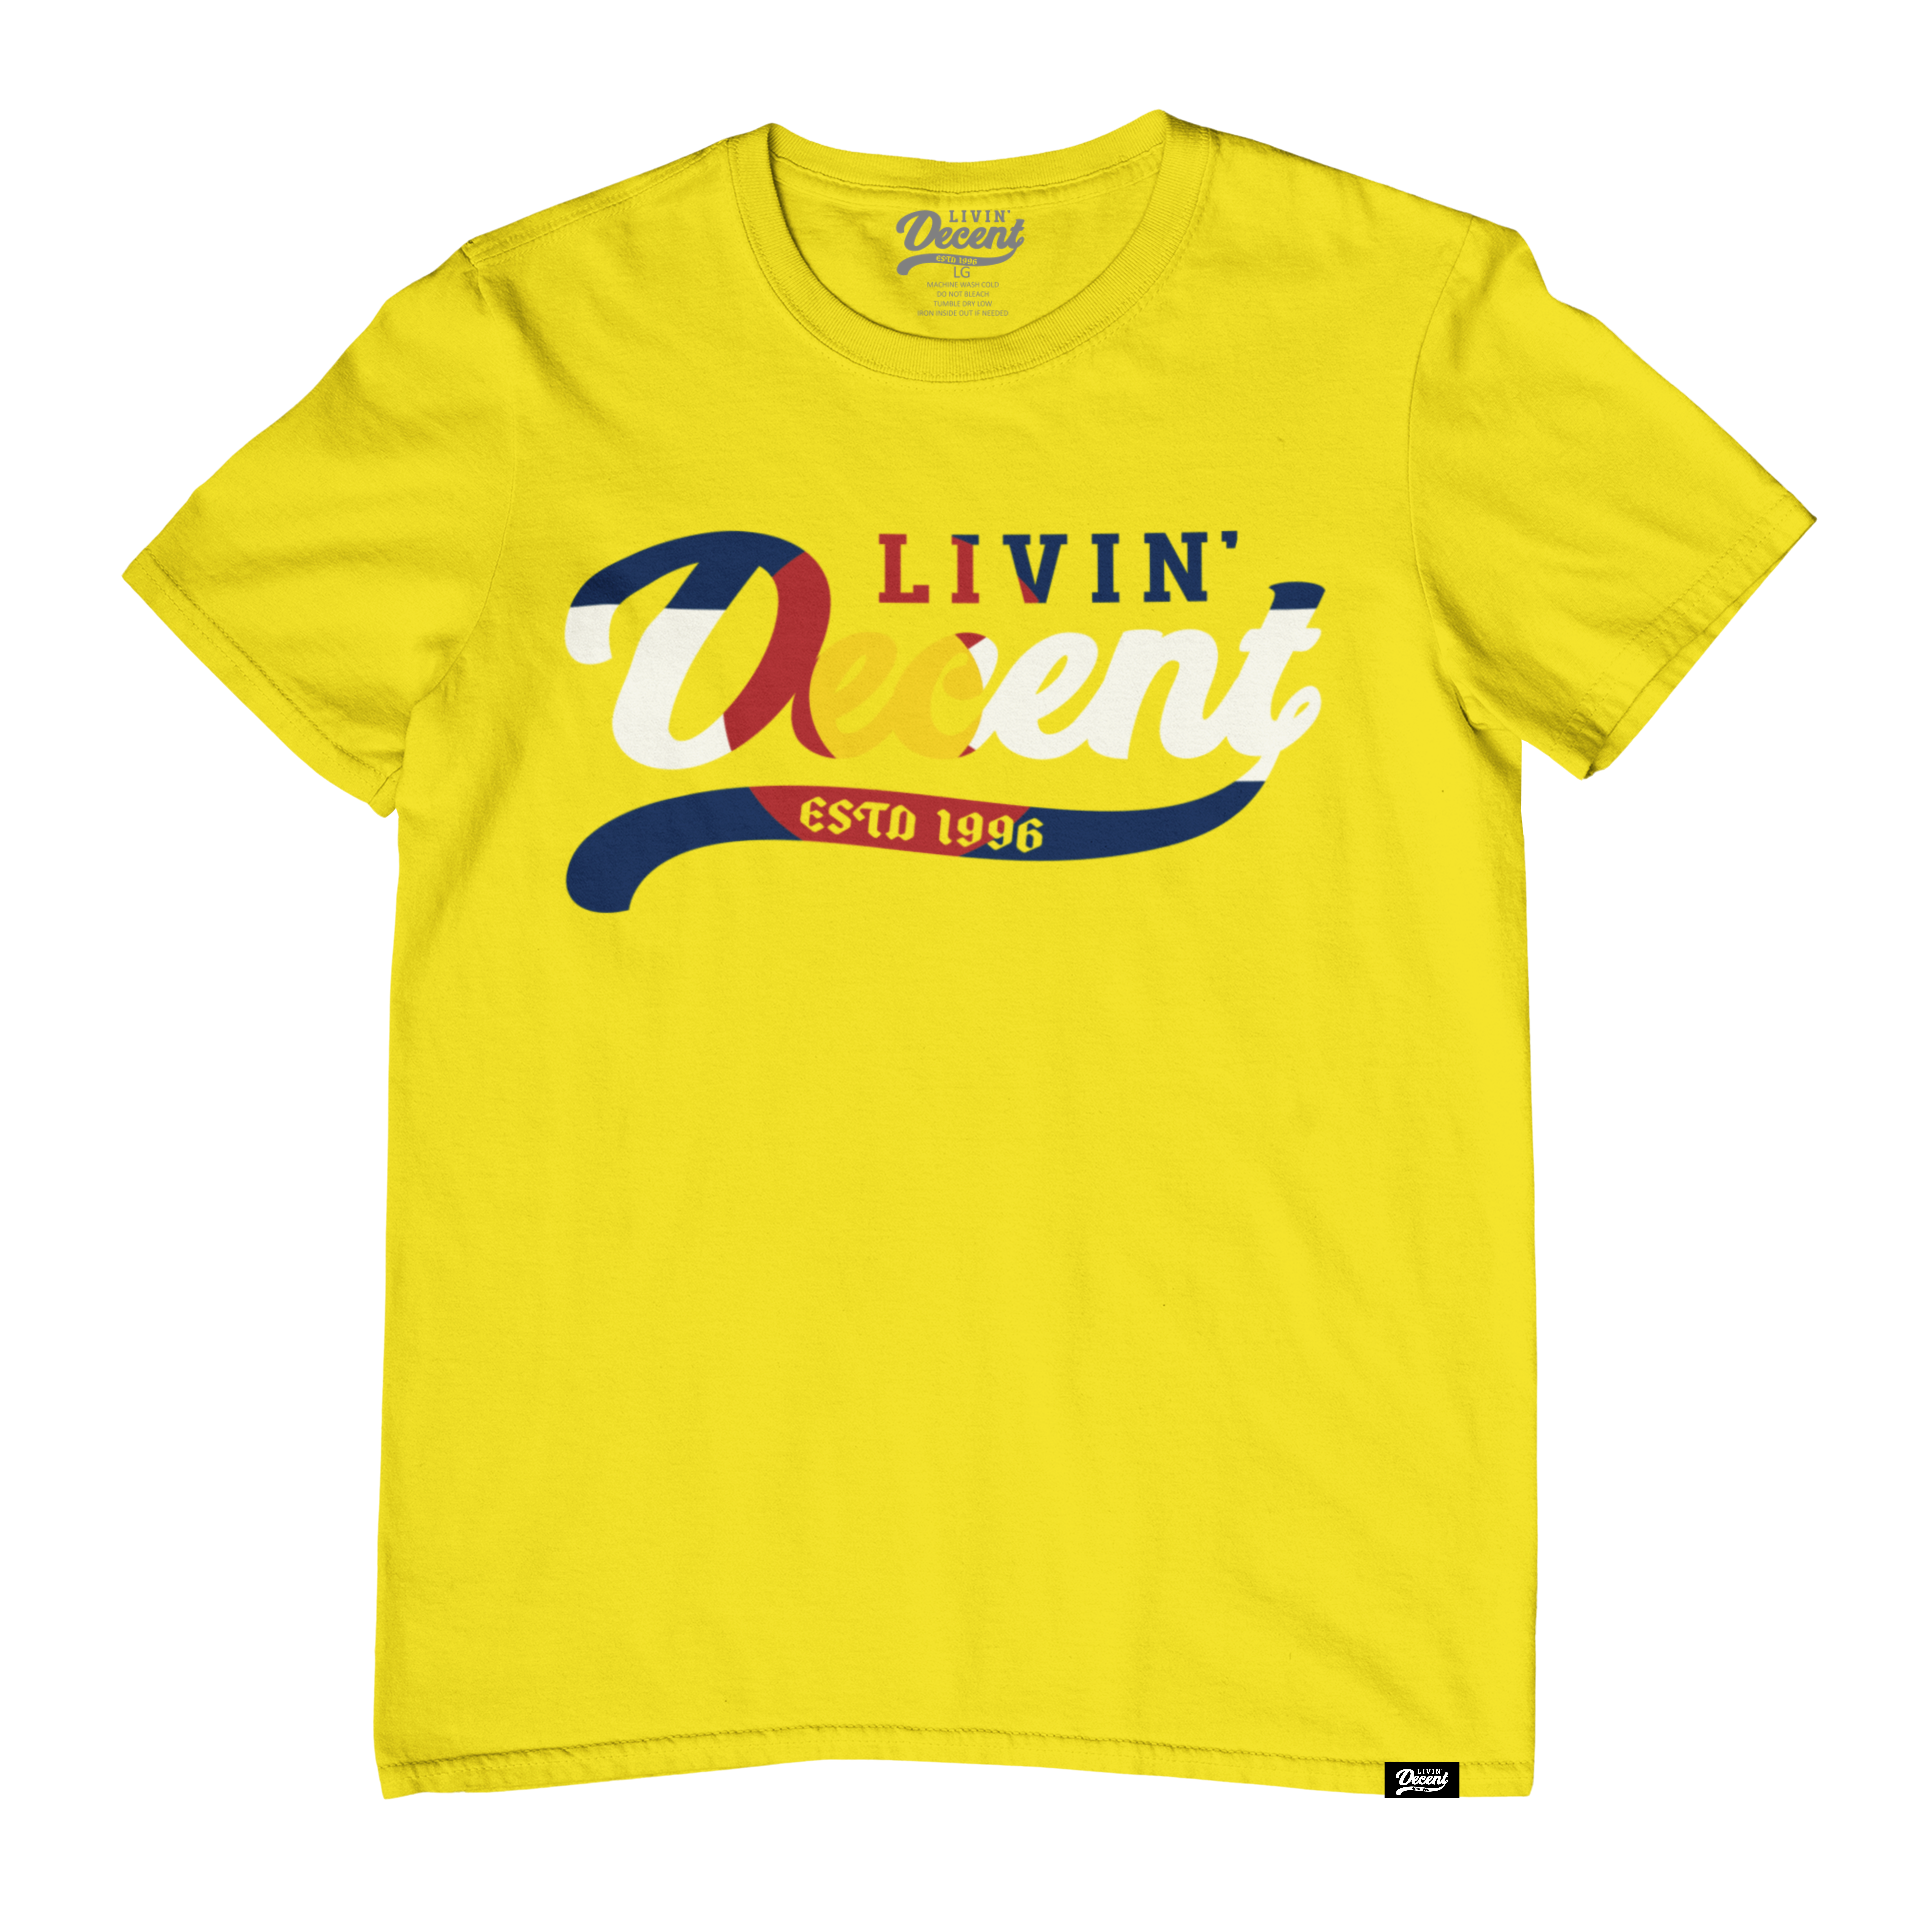 Livin' Decent Apparel Colorado T-Shirt XXL / Grey